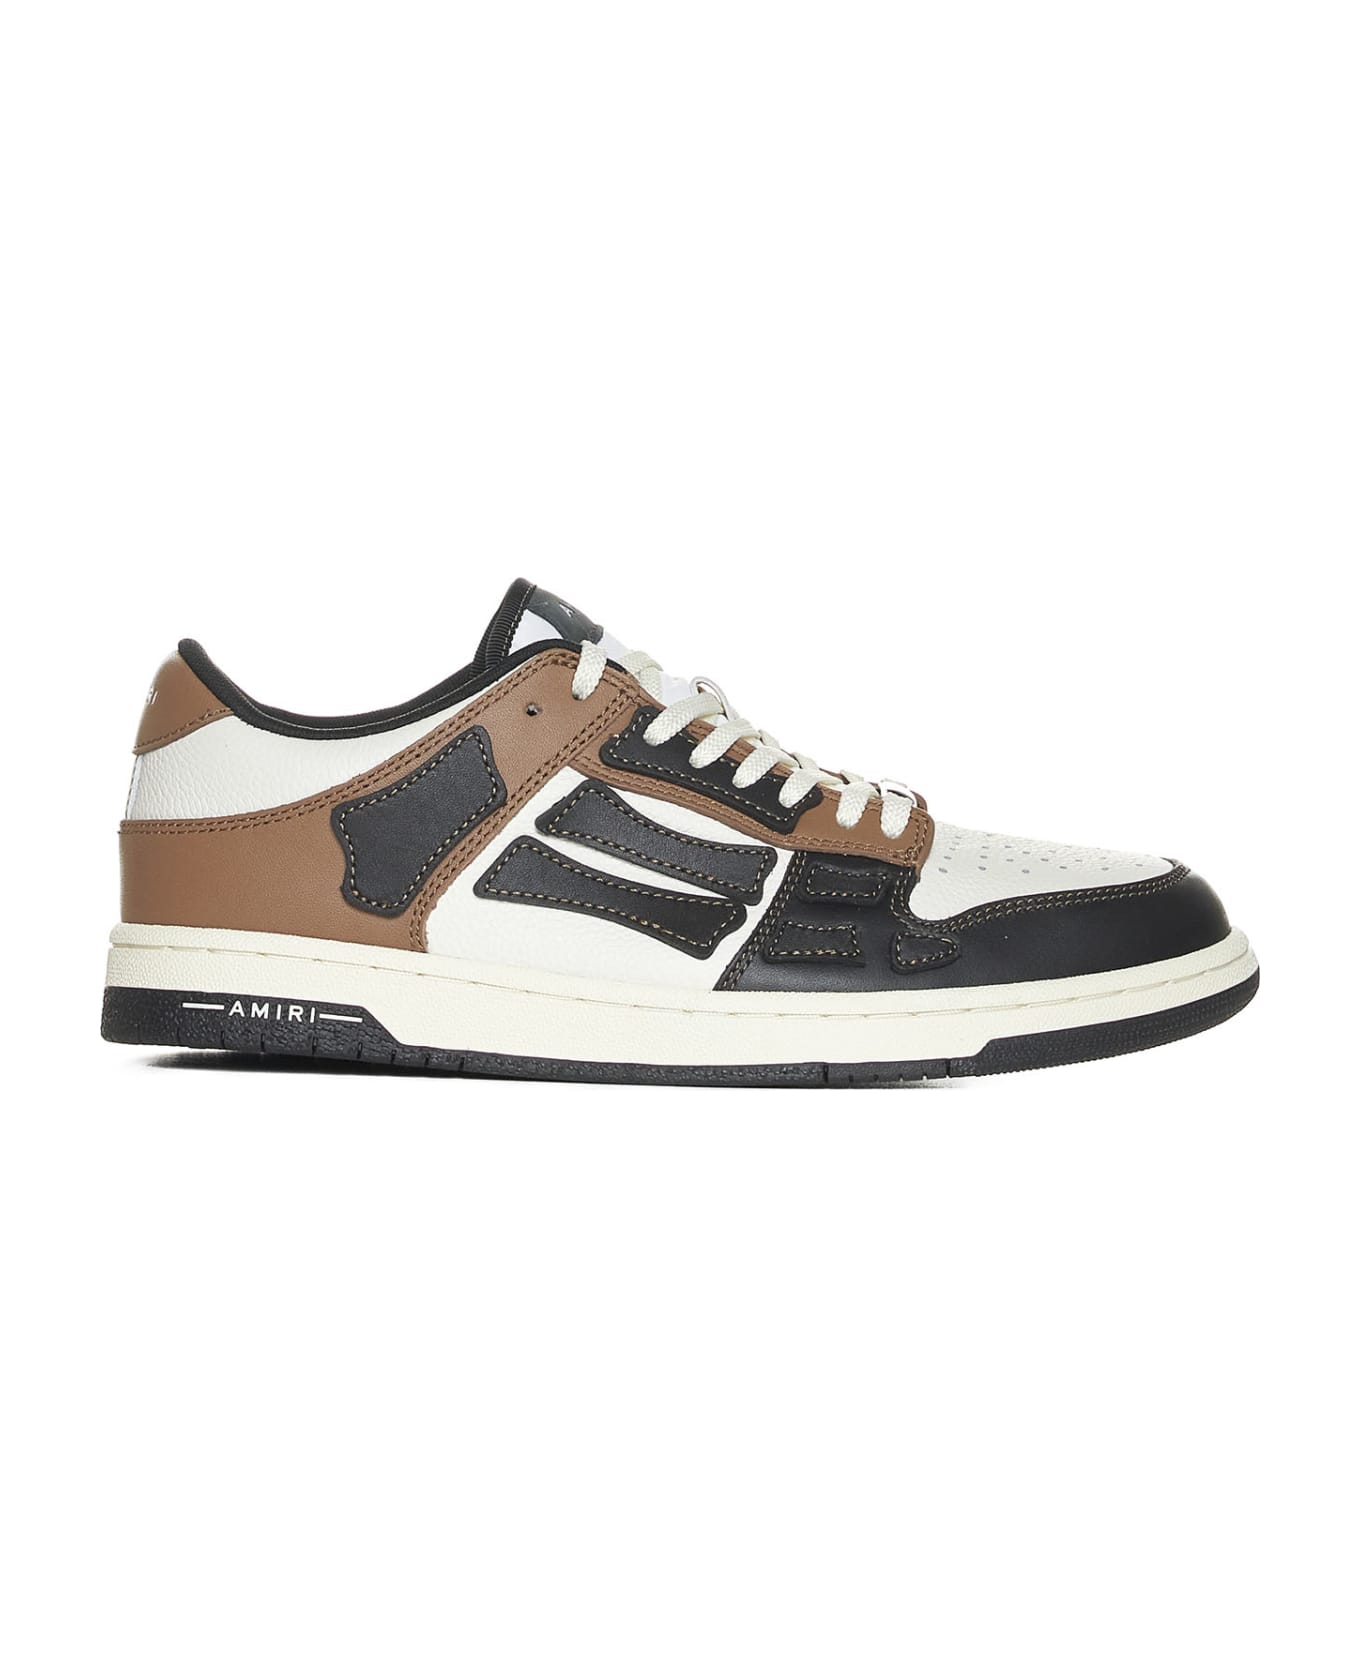 AMIRI Sneakers - Black/brown